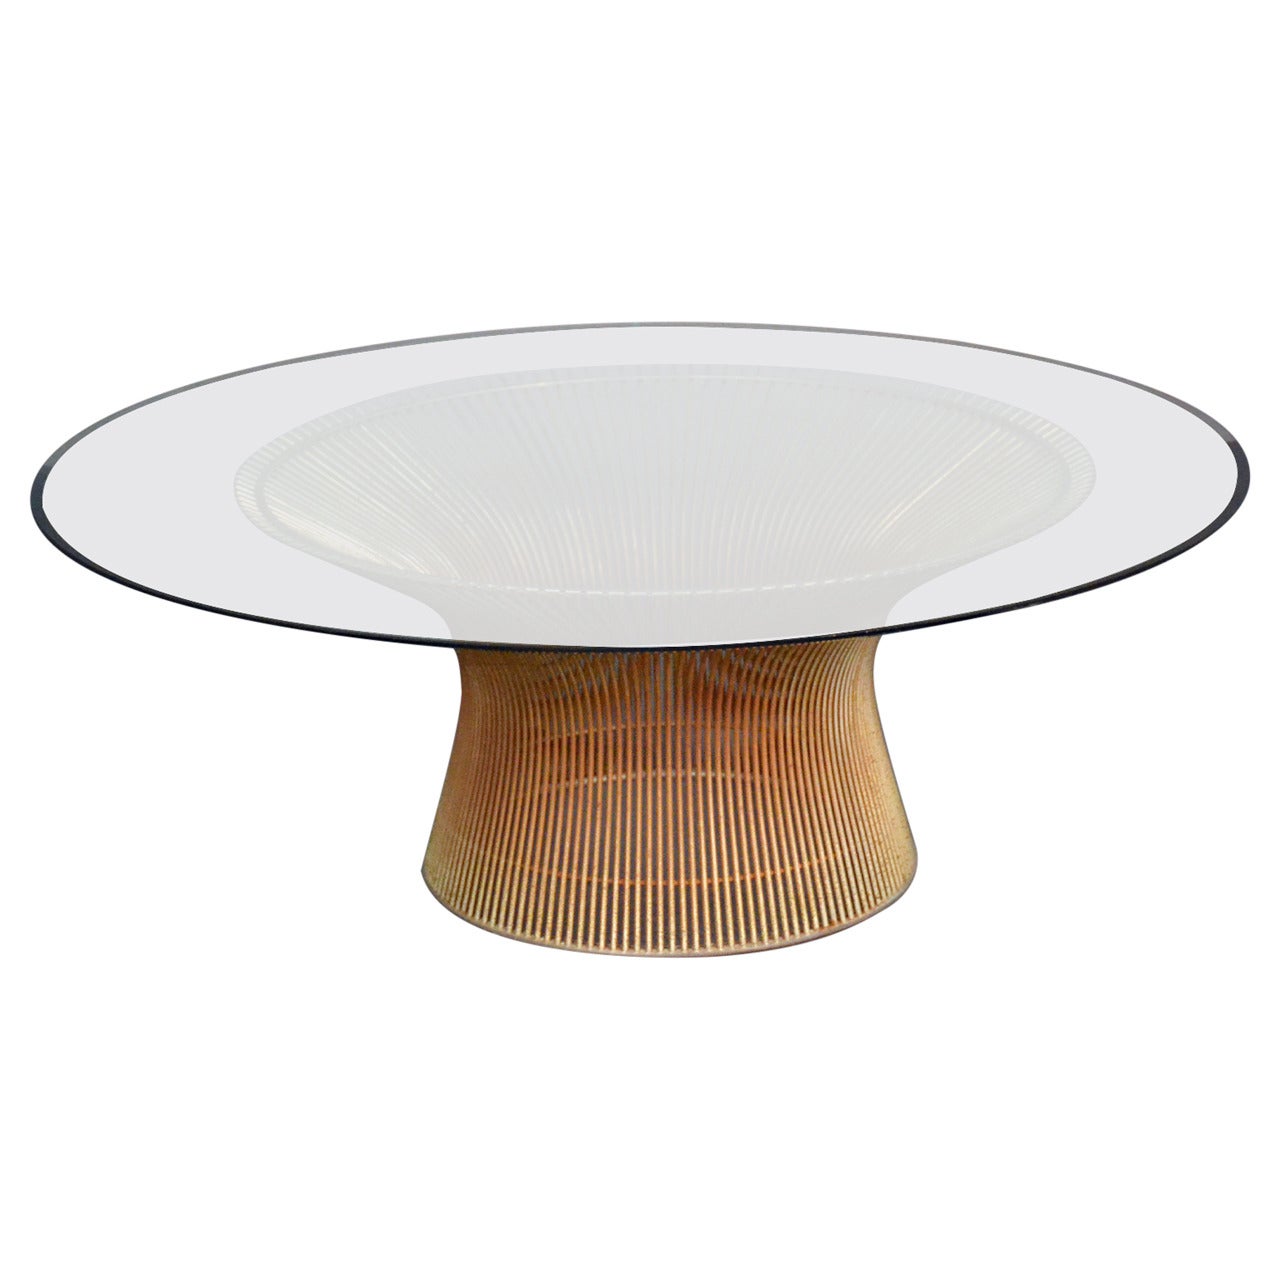 Warren Platner Coffee Table with Glass Top